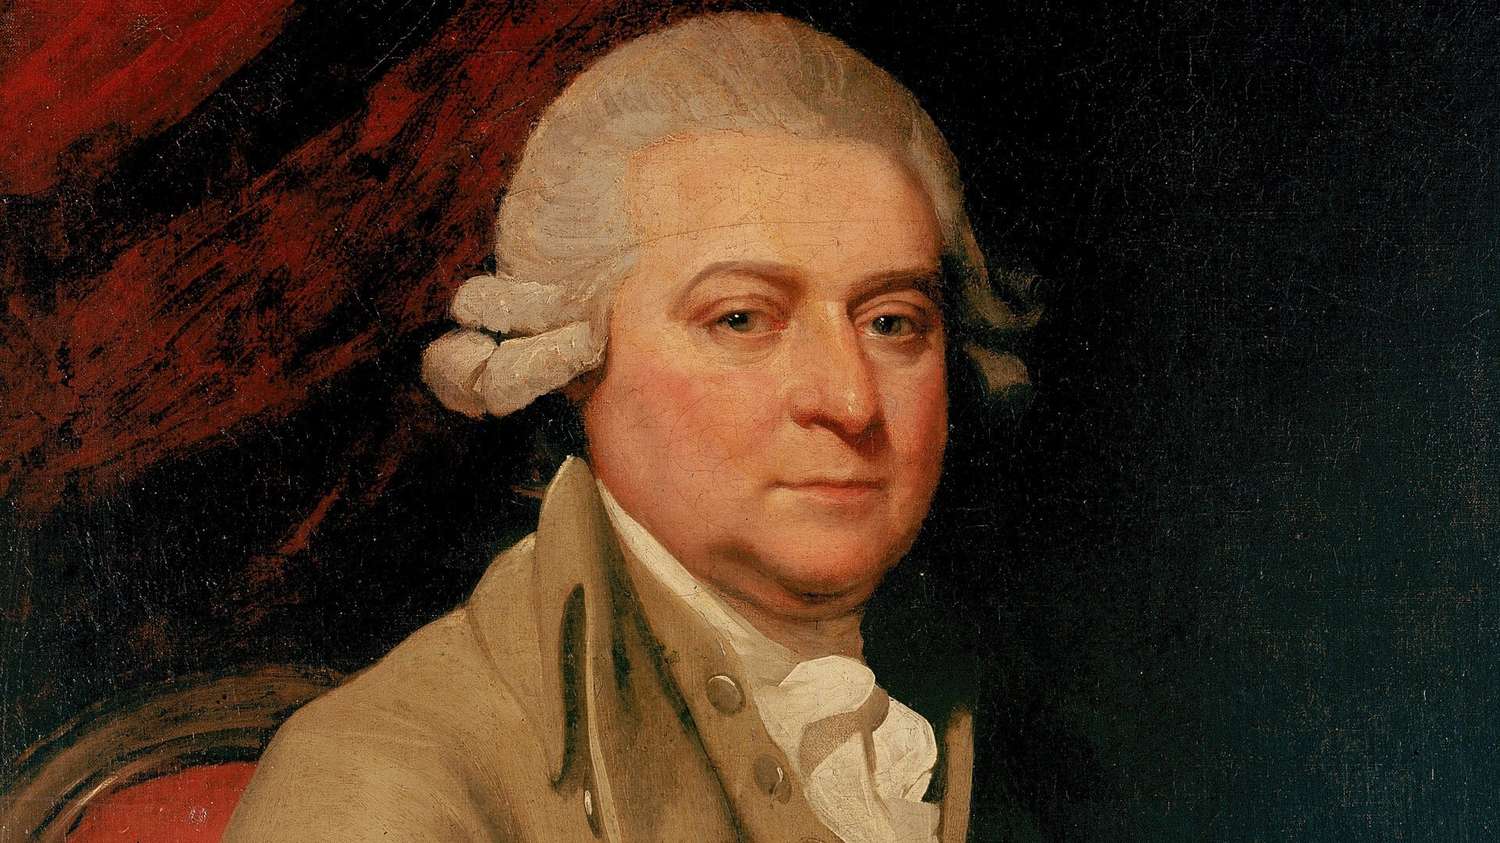 John Adams: The Pillar of American Independence and Governance